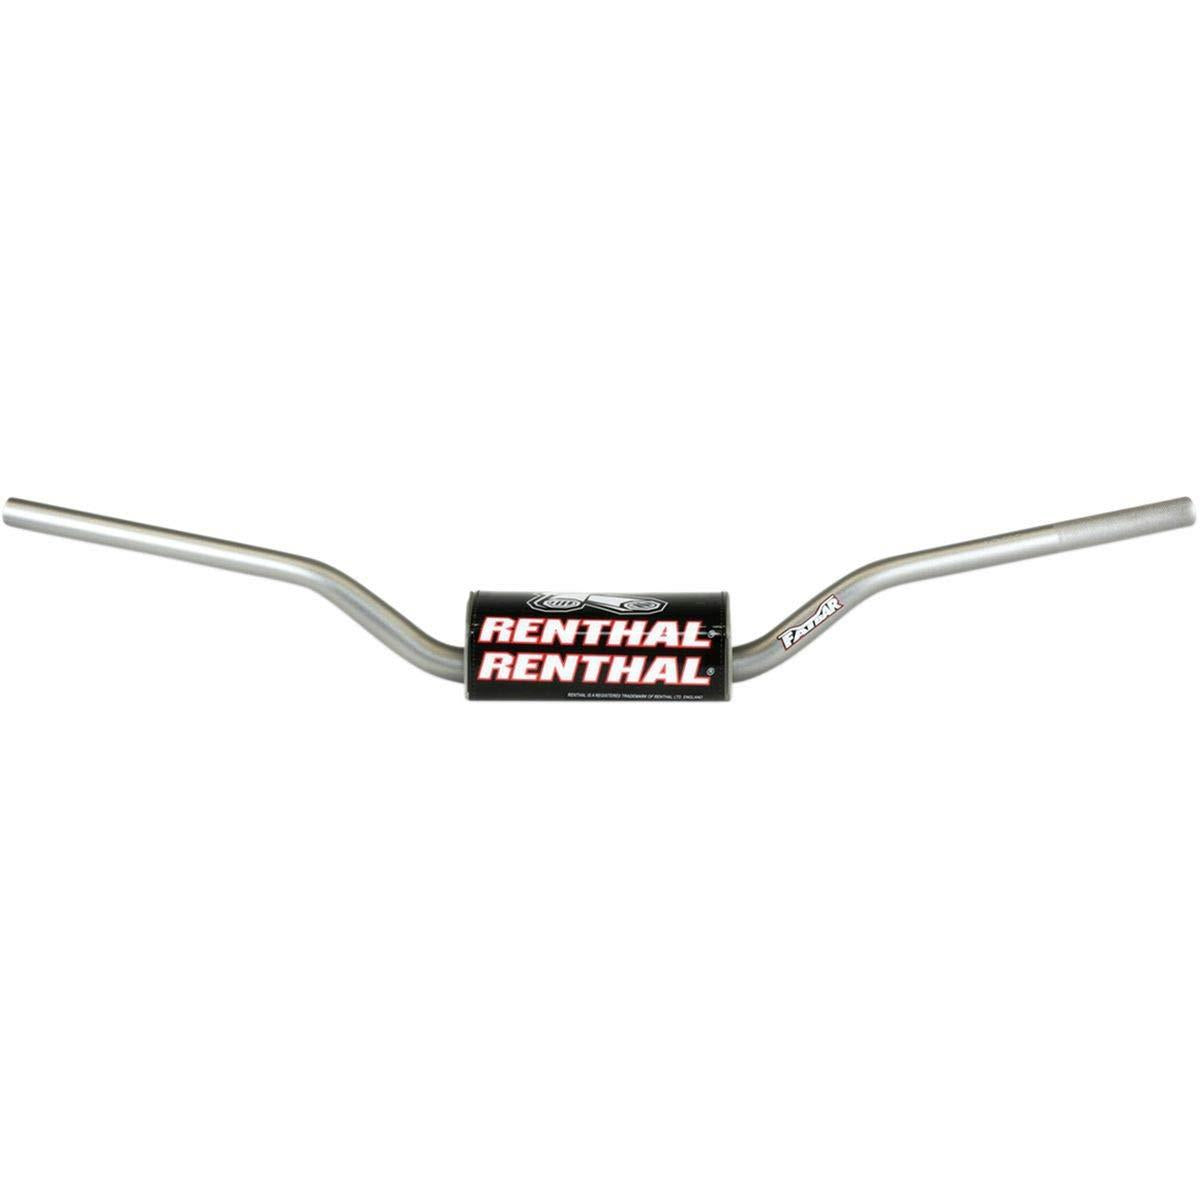 Renthal Fat Bar Fatbar Handlebars Honda 605-01 Titanium Bend CR High/Ricky Johnson